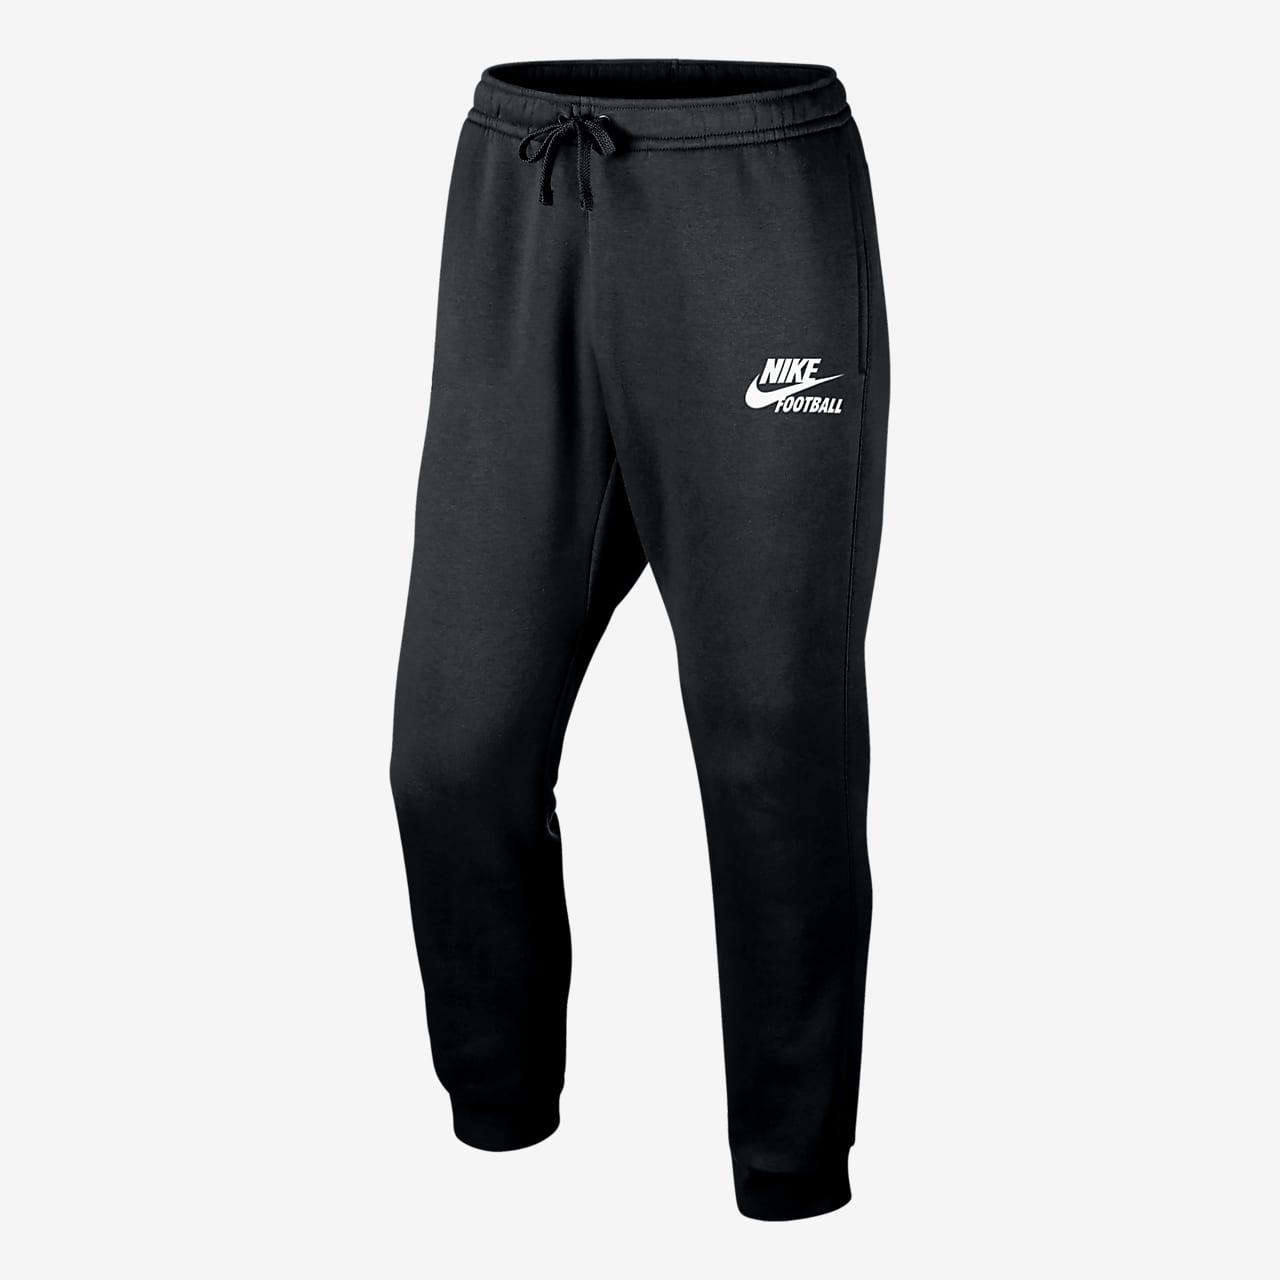 Laboratorium sejle muskel Nike Sportswear Club Fleece Men's Football Pants. Nike.com